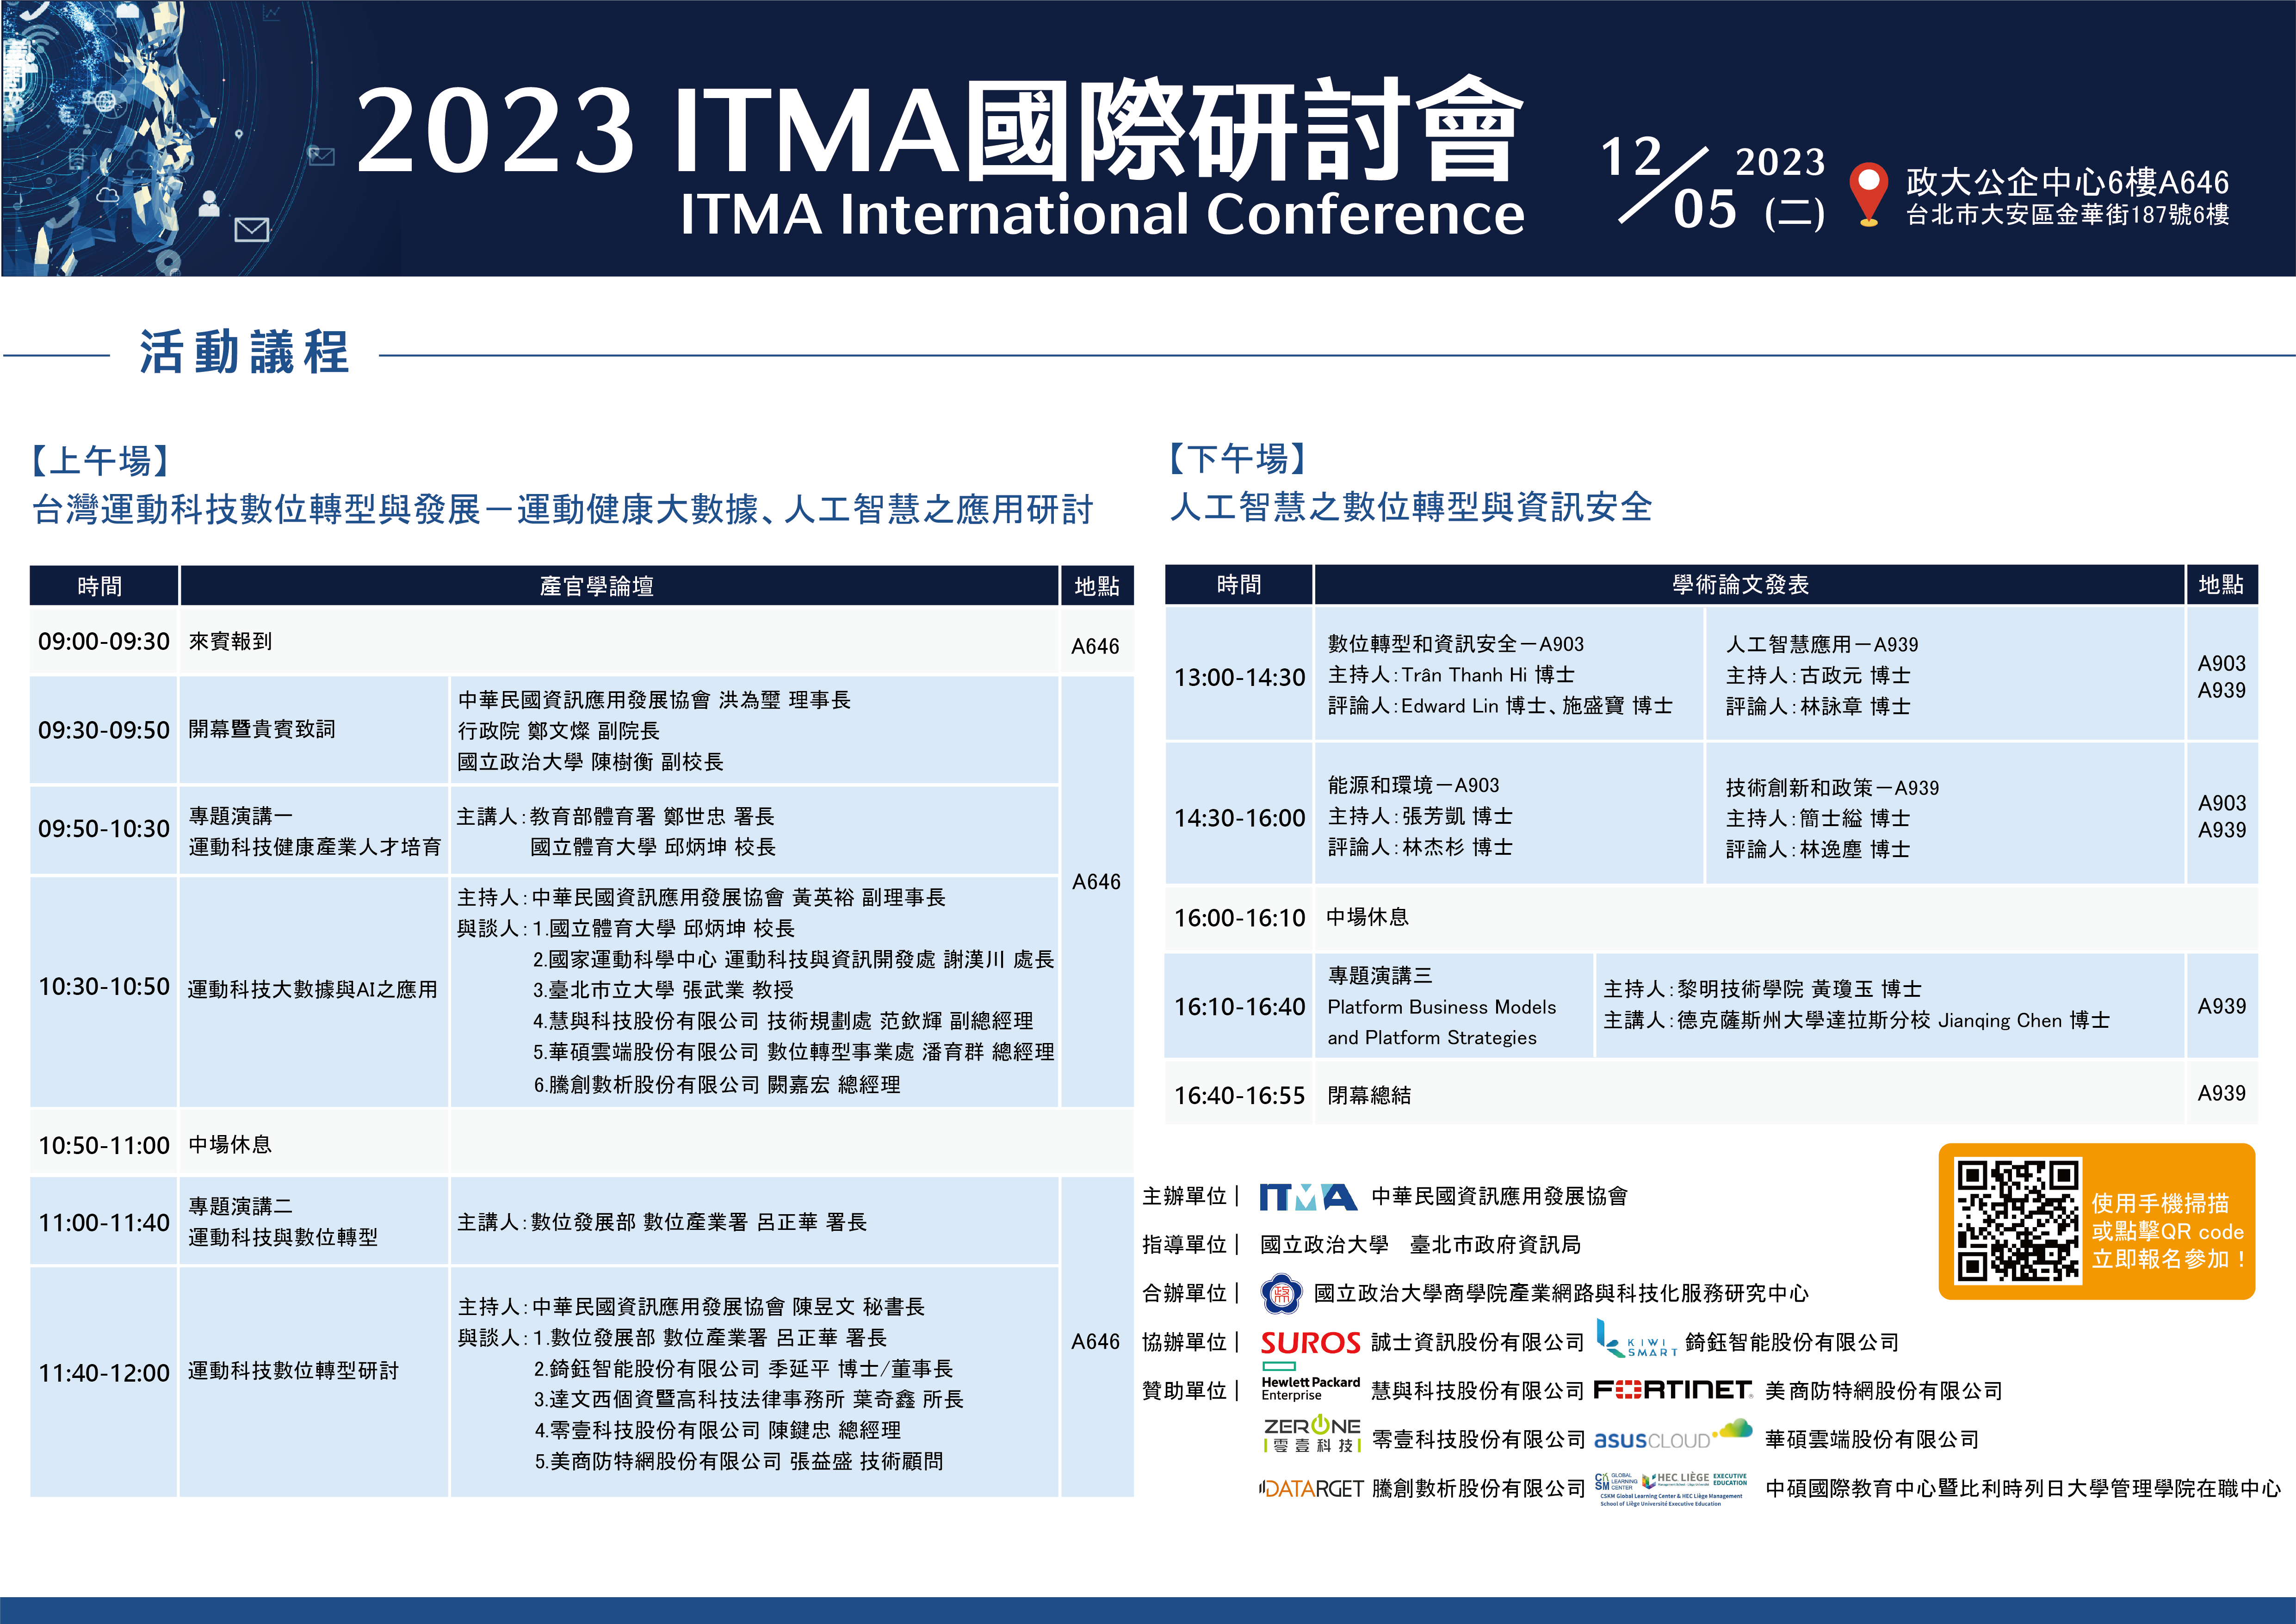 2023 ITMA國際研討會